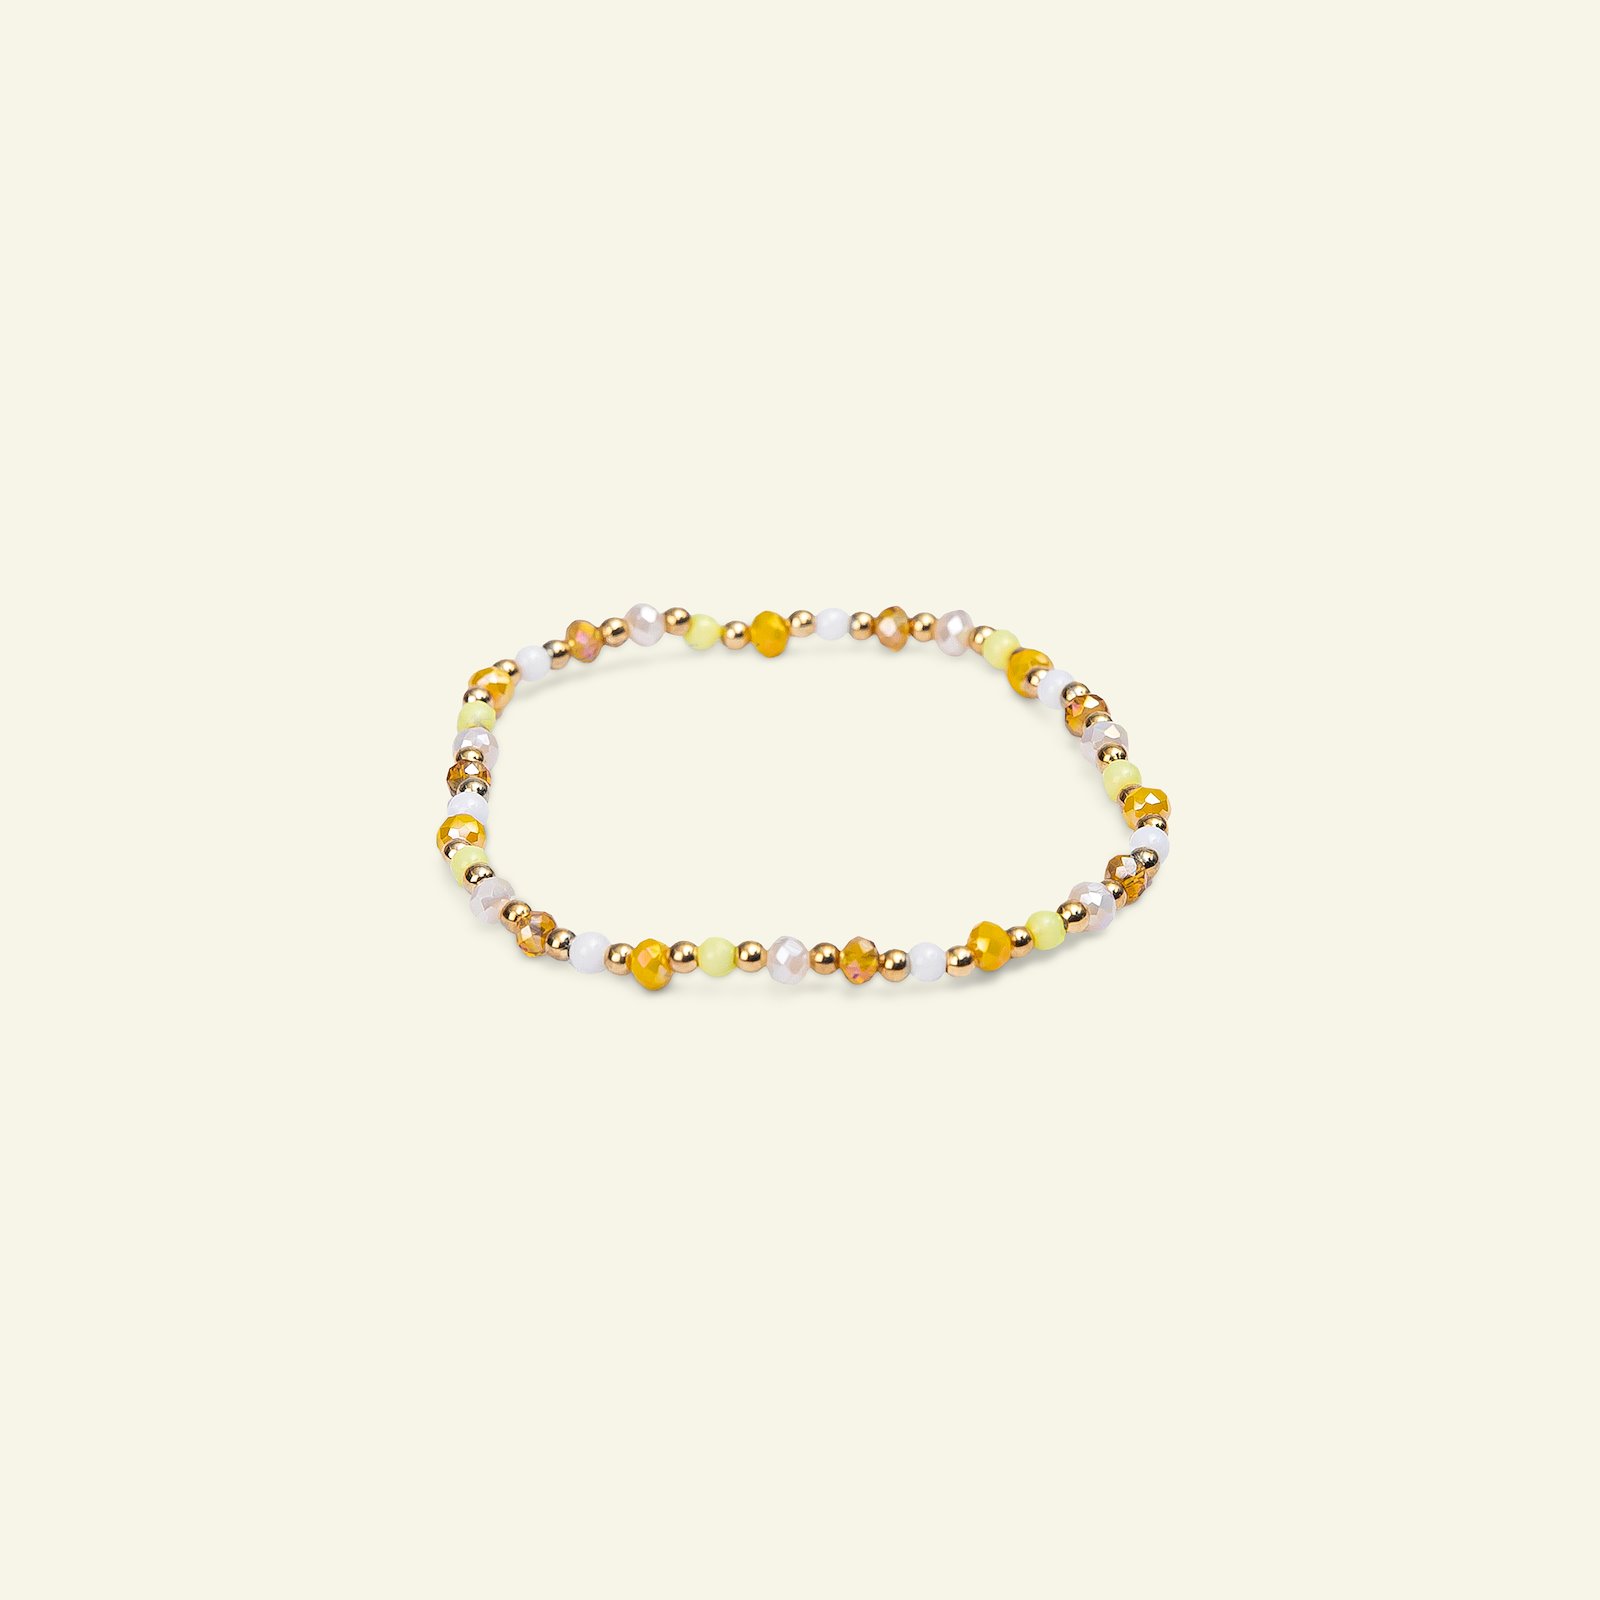 Kit bracelet beads yellow/gold mix 1pc 26908_pack_c